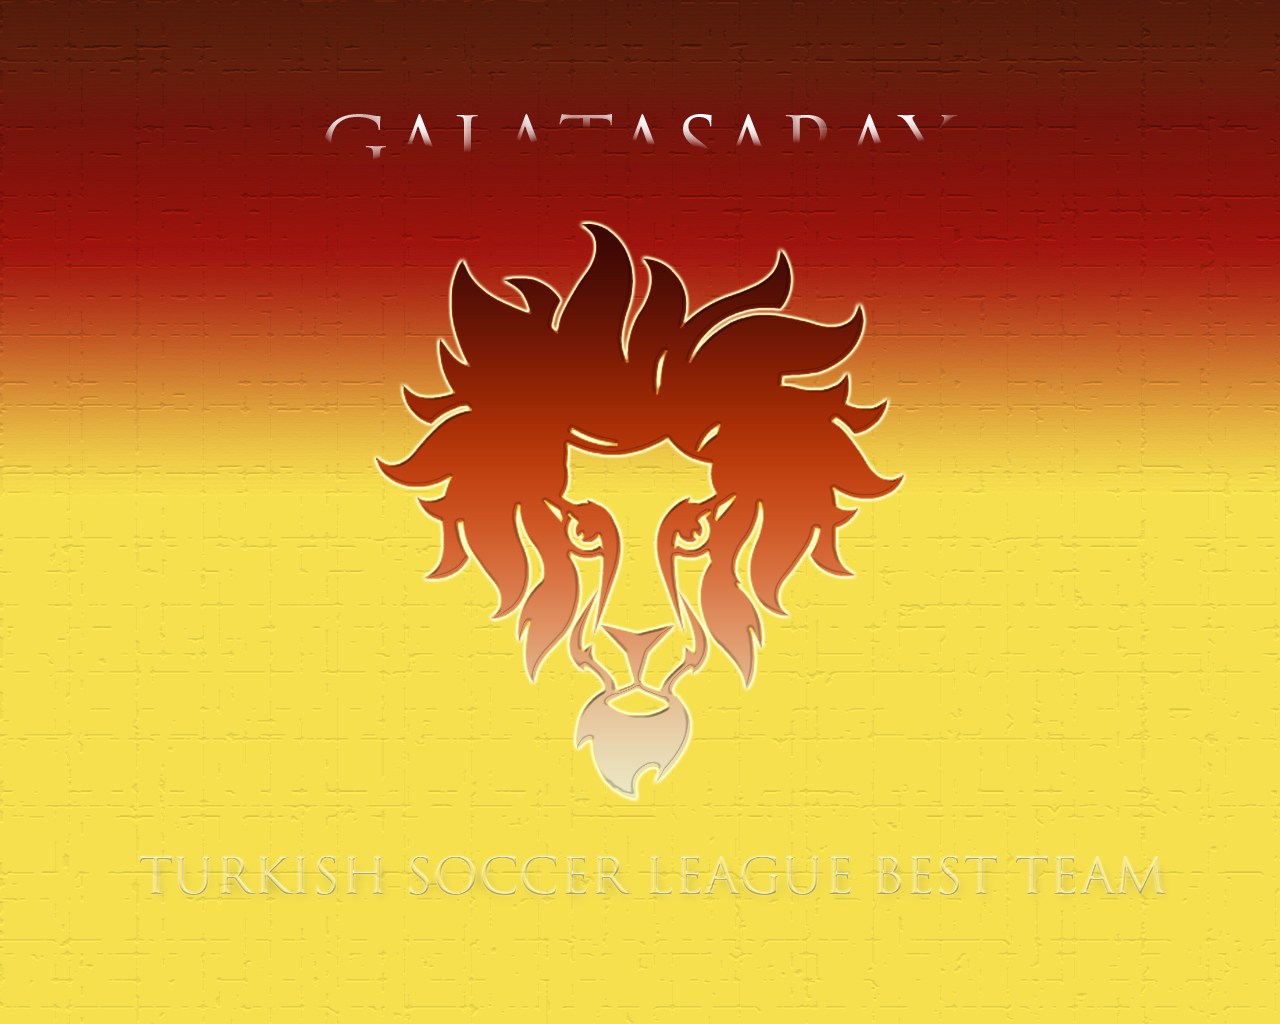 galatasaray best team by dabbex30